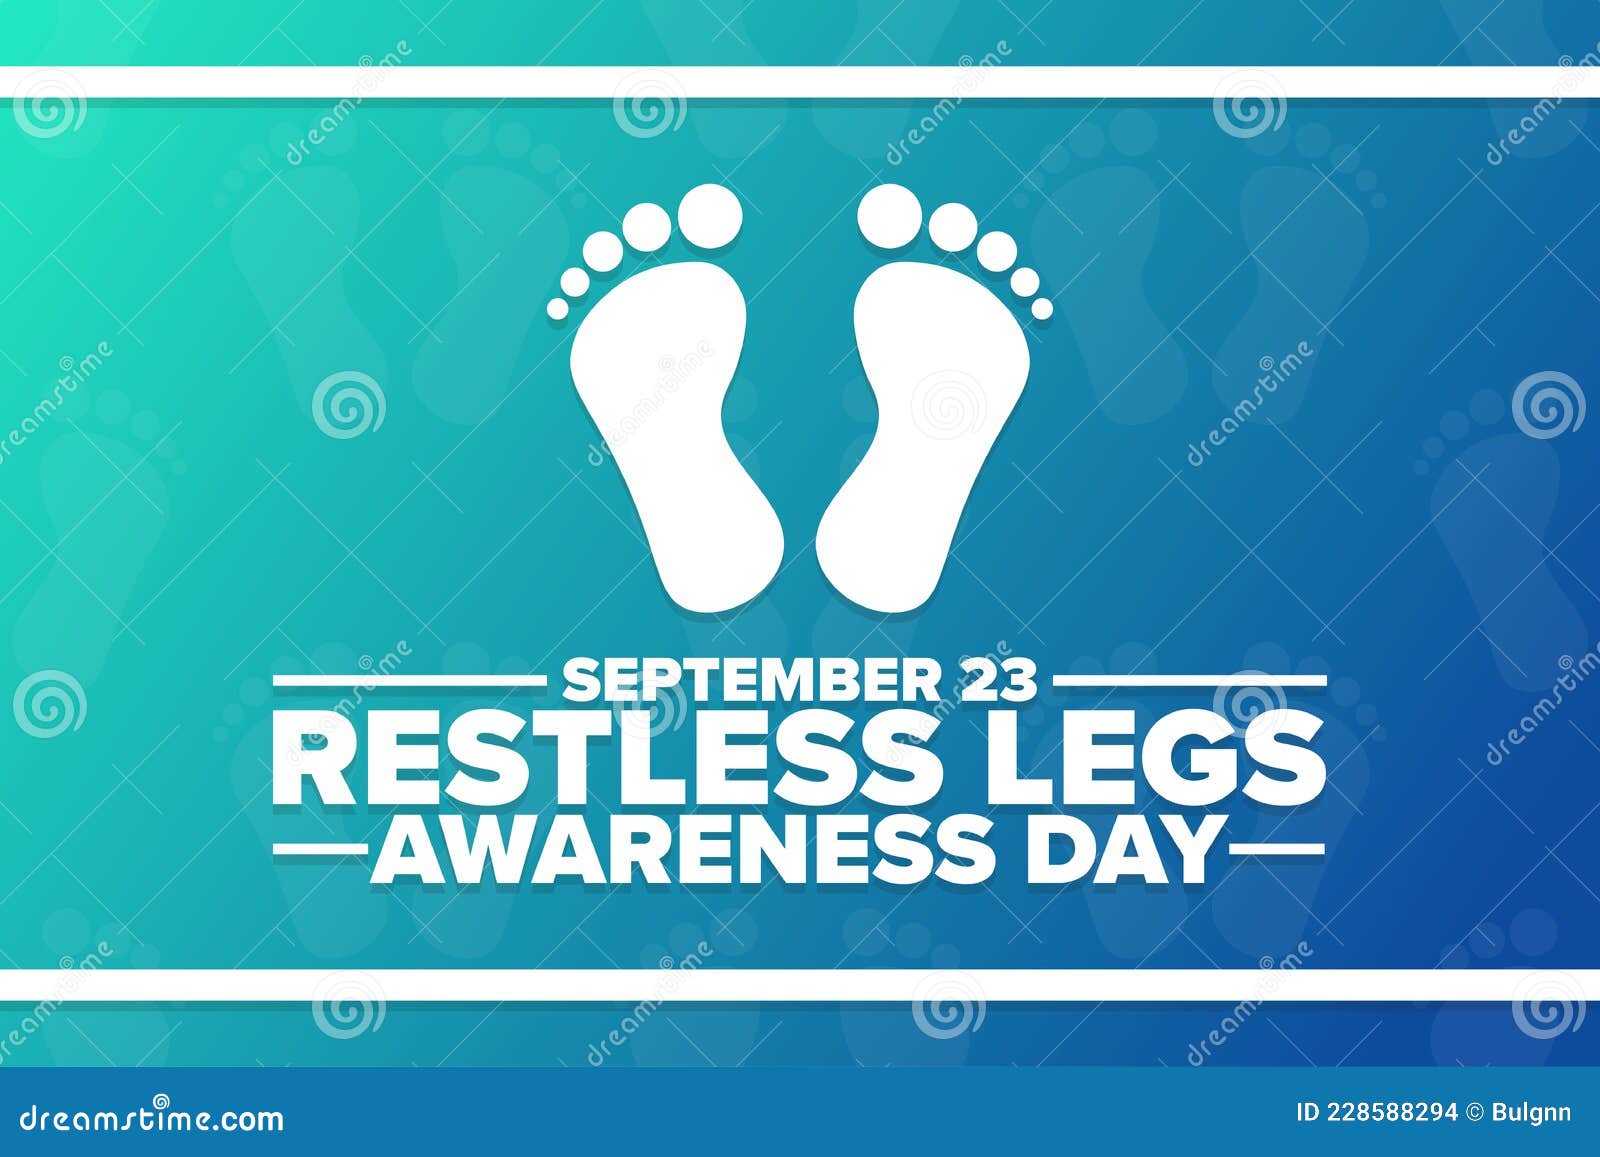 lens Boodschapper Sneeuwstorm Restless Legs Awareness Day. September 23. Holiday Concept Stock Vector -  Illustration of foot, celebration: 228588294